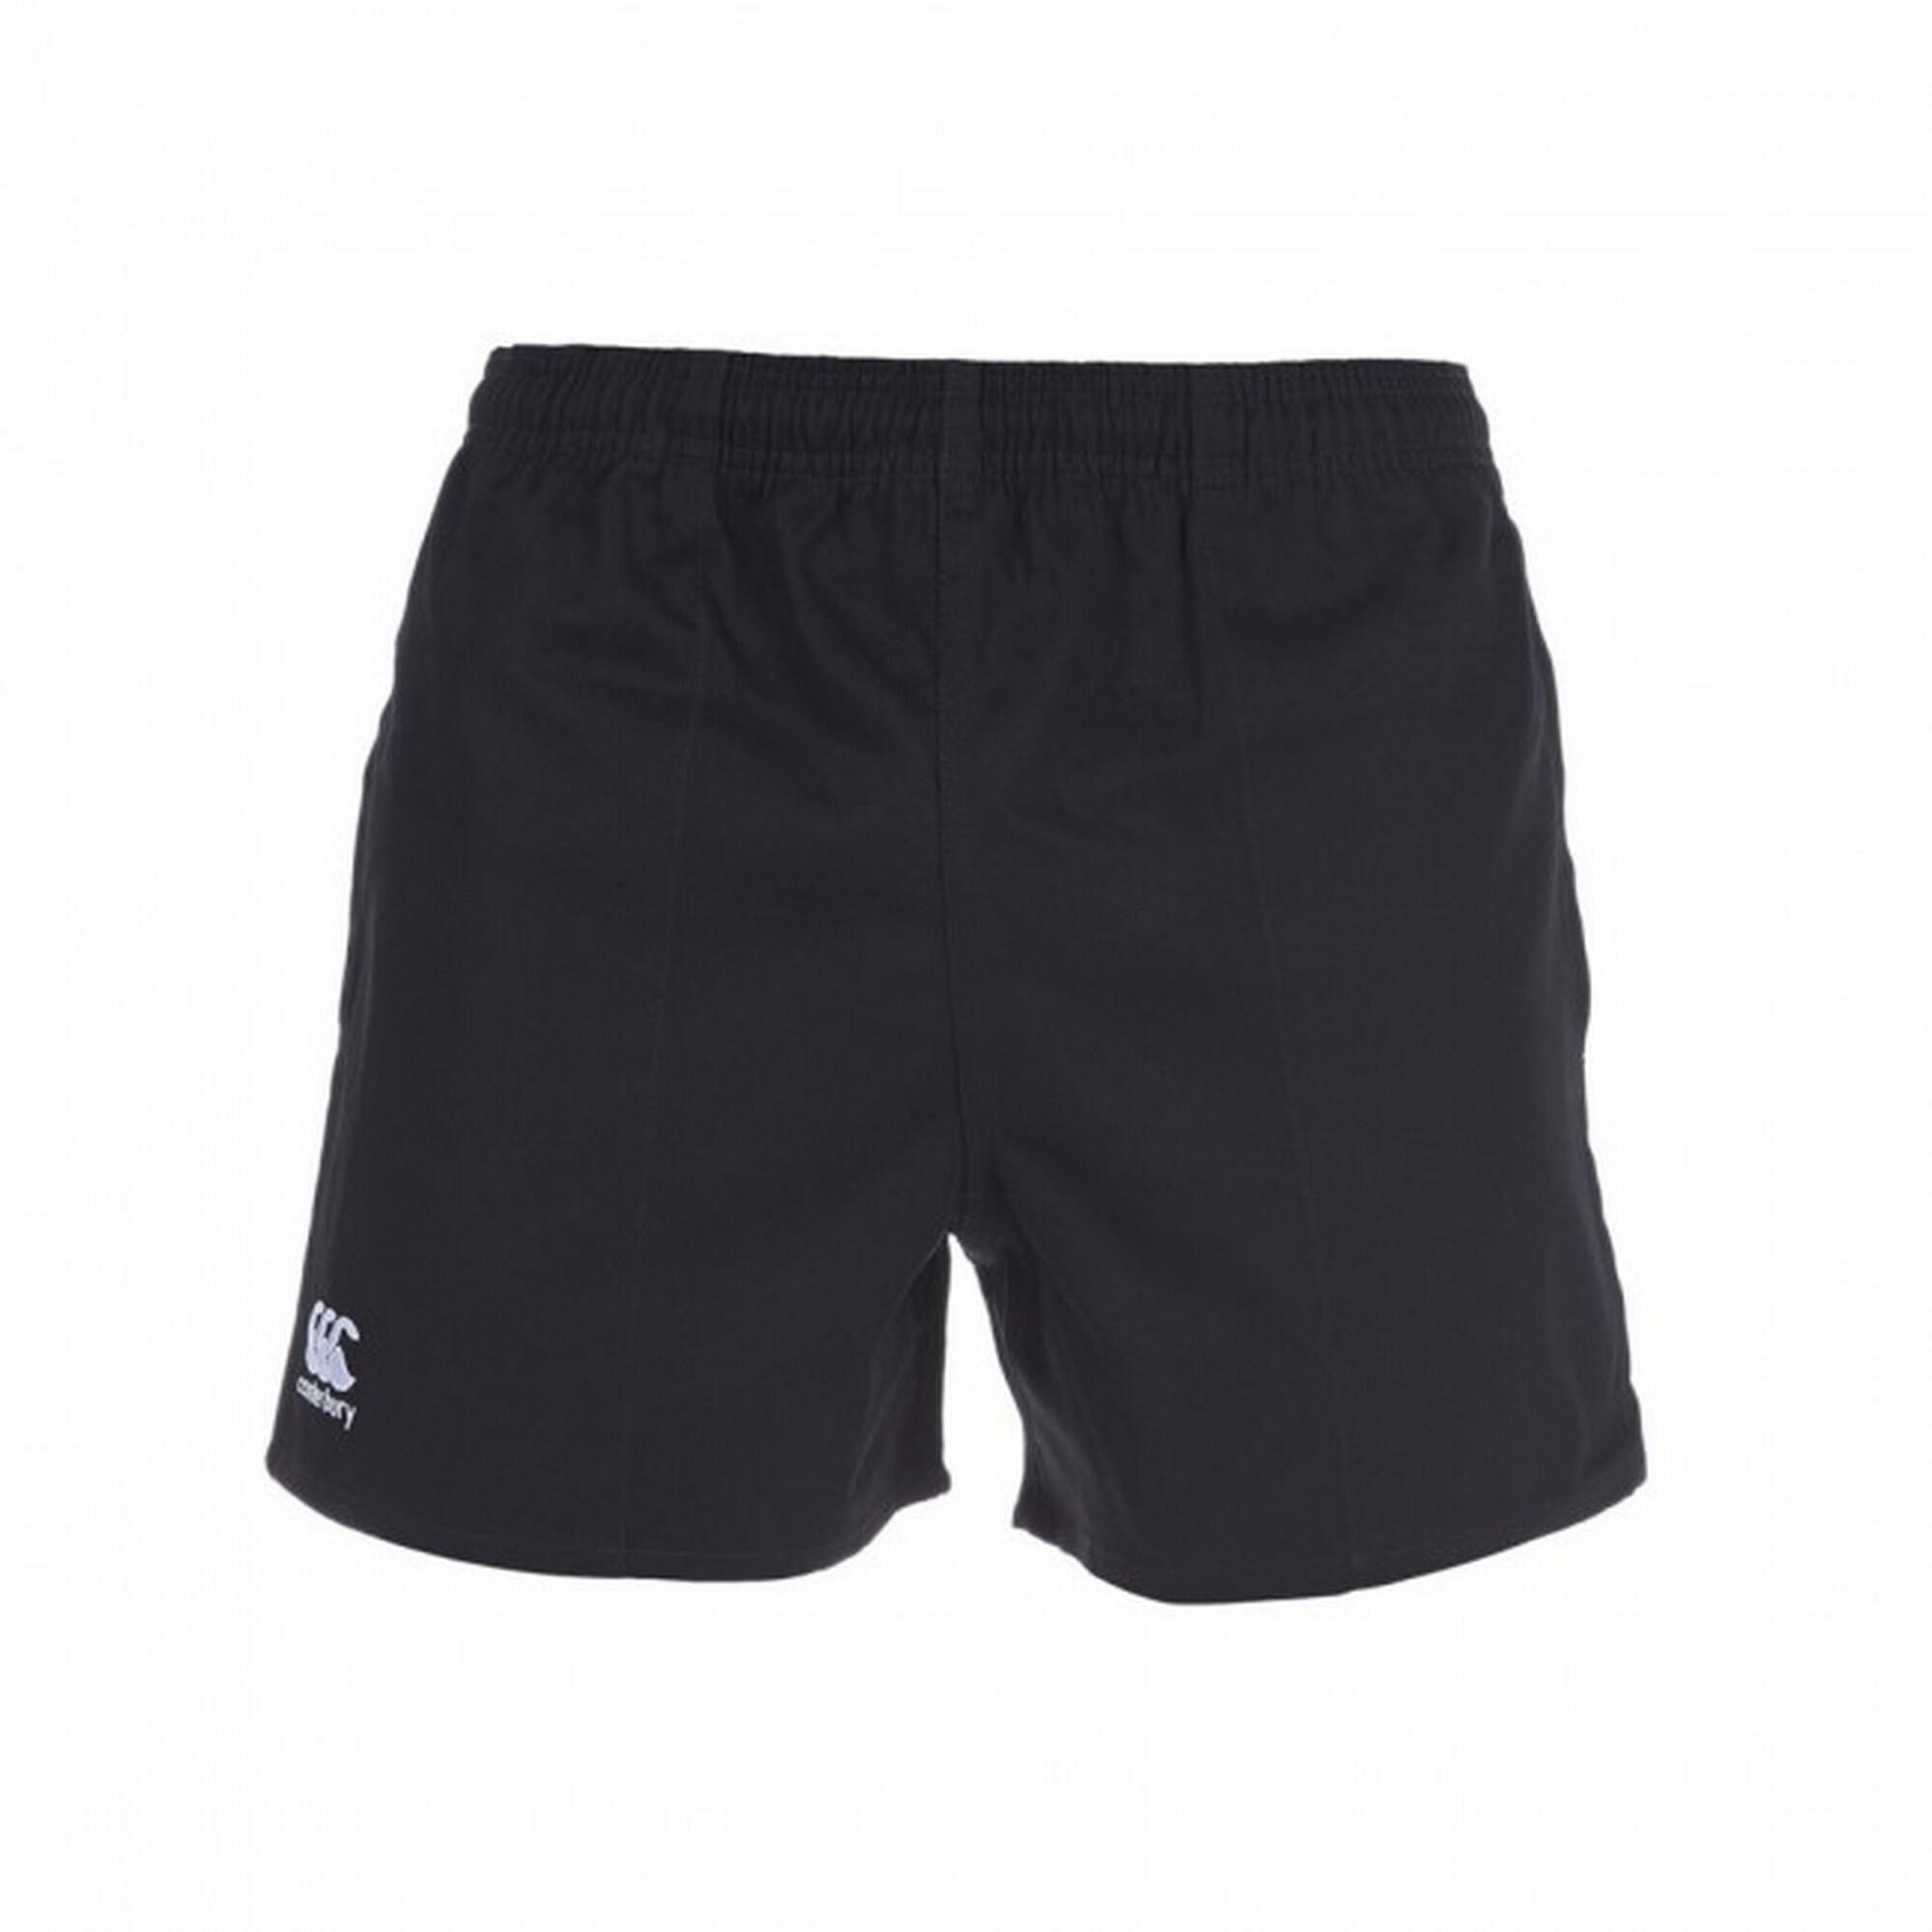 CANTERBURY Childrens Teens Professional Elasticated Sports Shorts (Black)